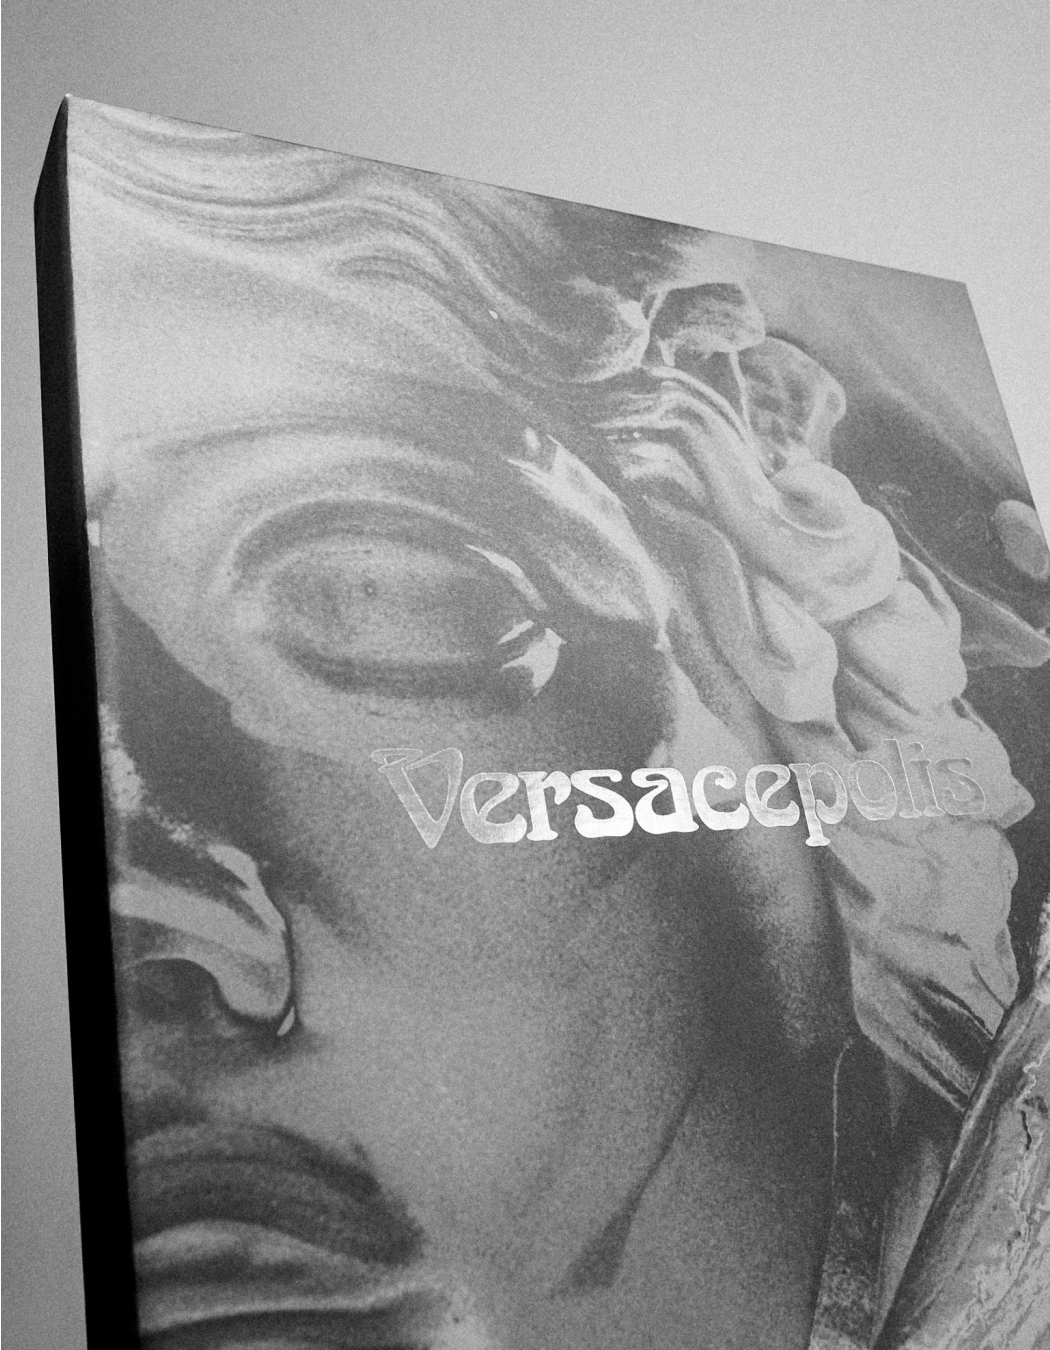 Versace 1-min